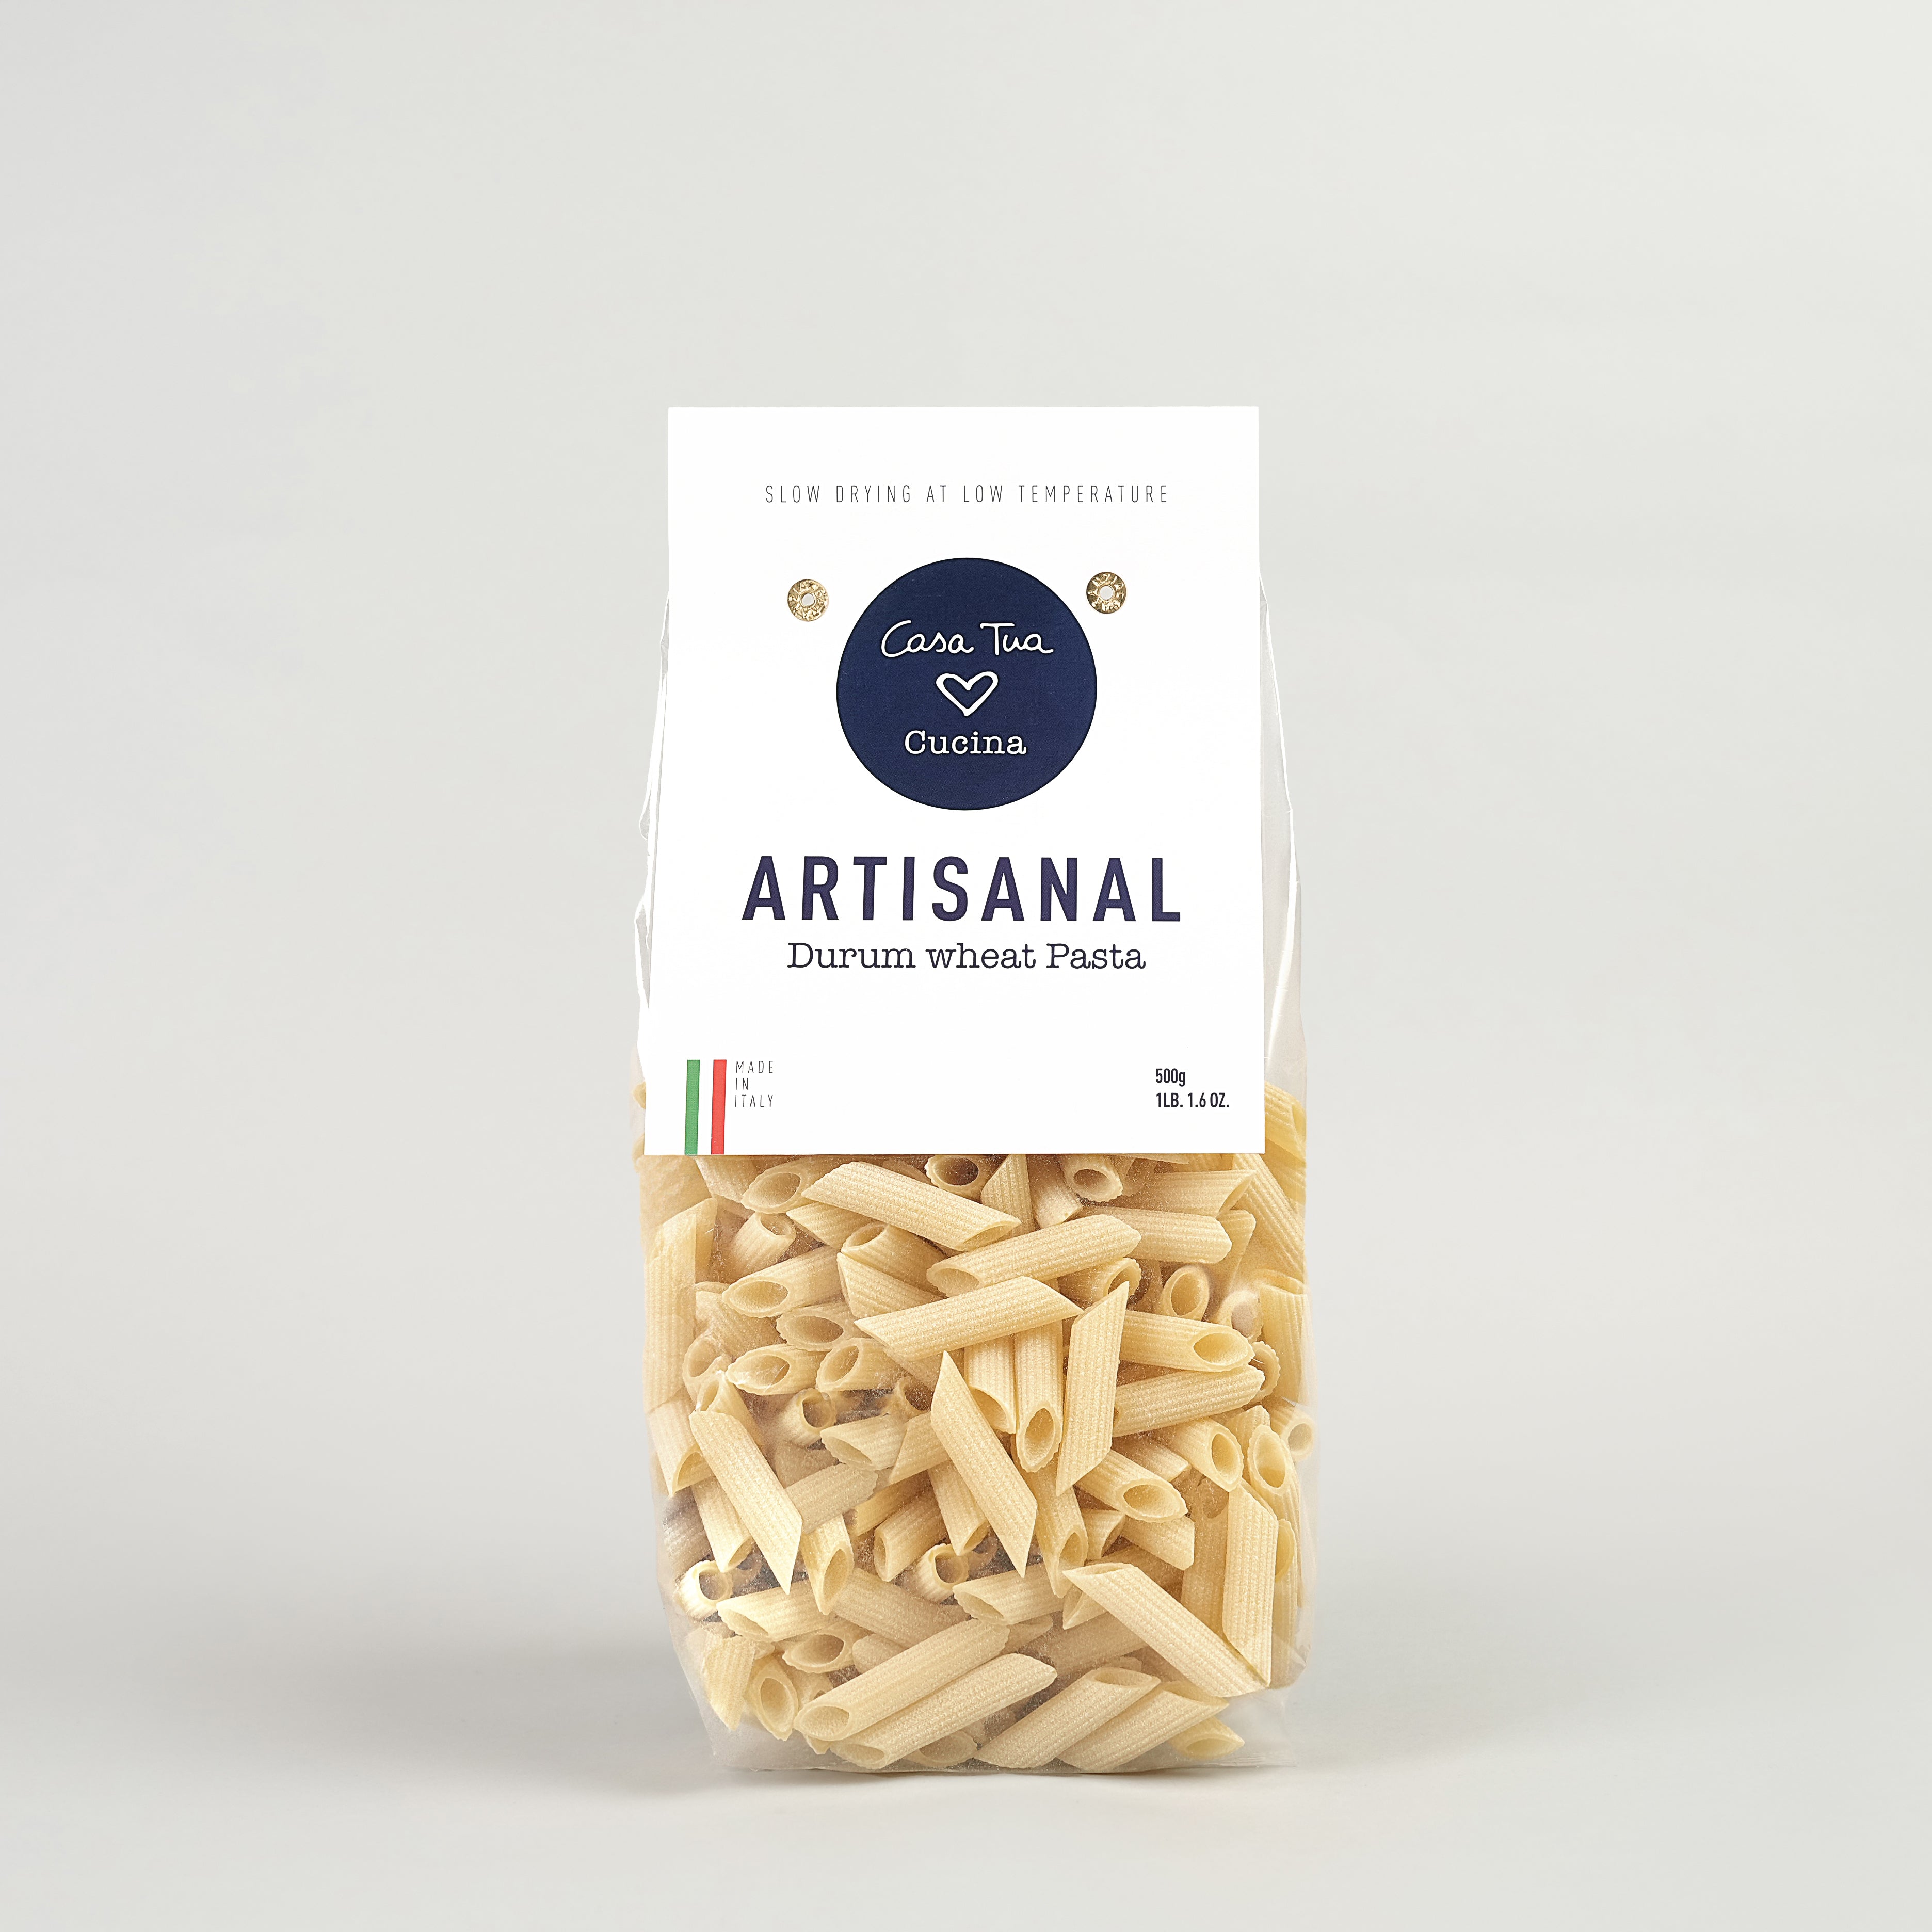 Artisanal Durum Wheat Pasta “Penne rigate” - 1lb.